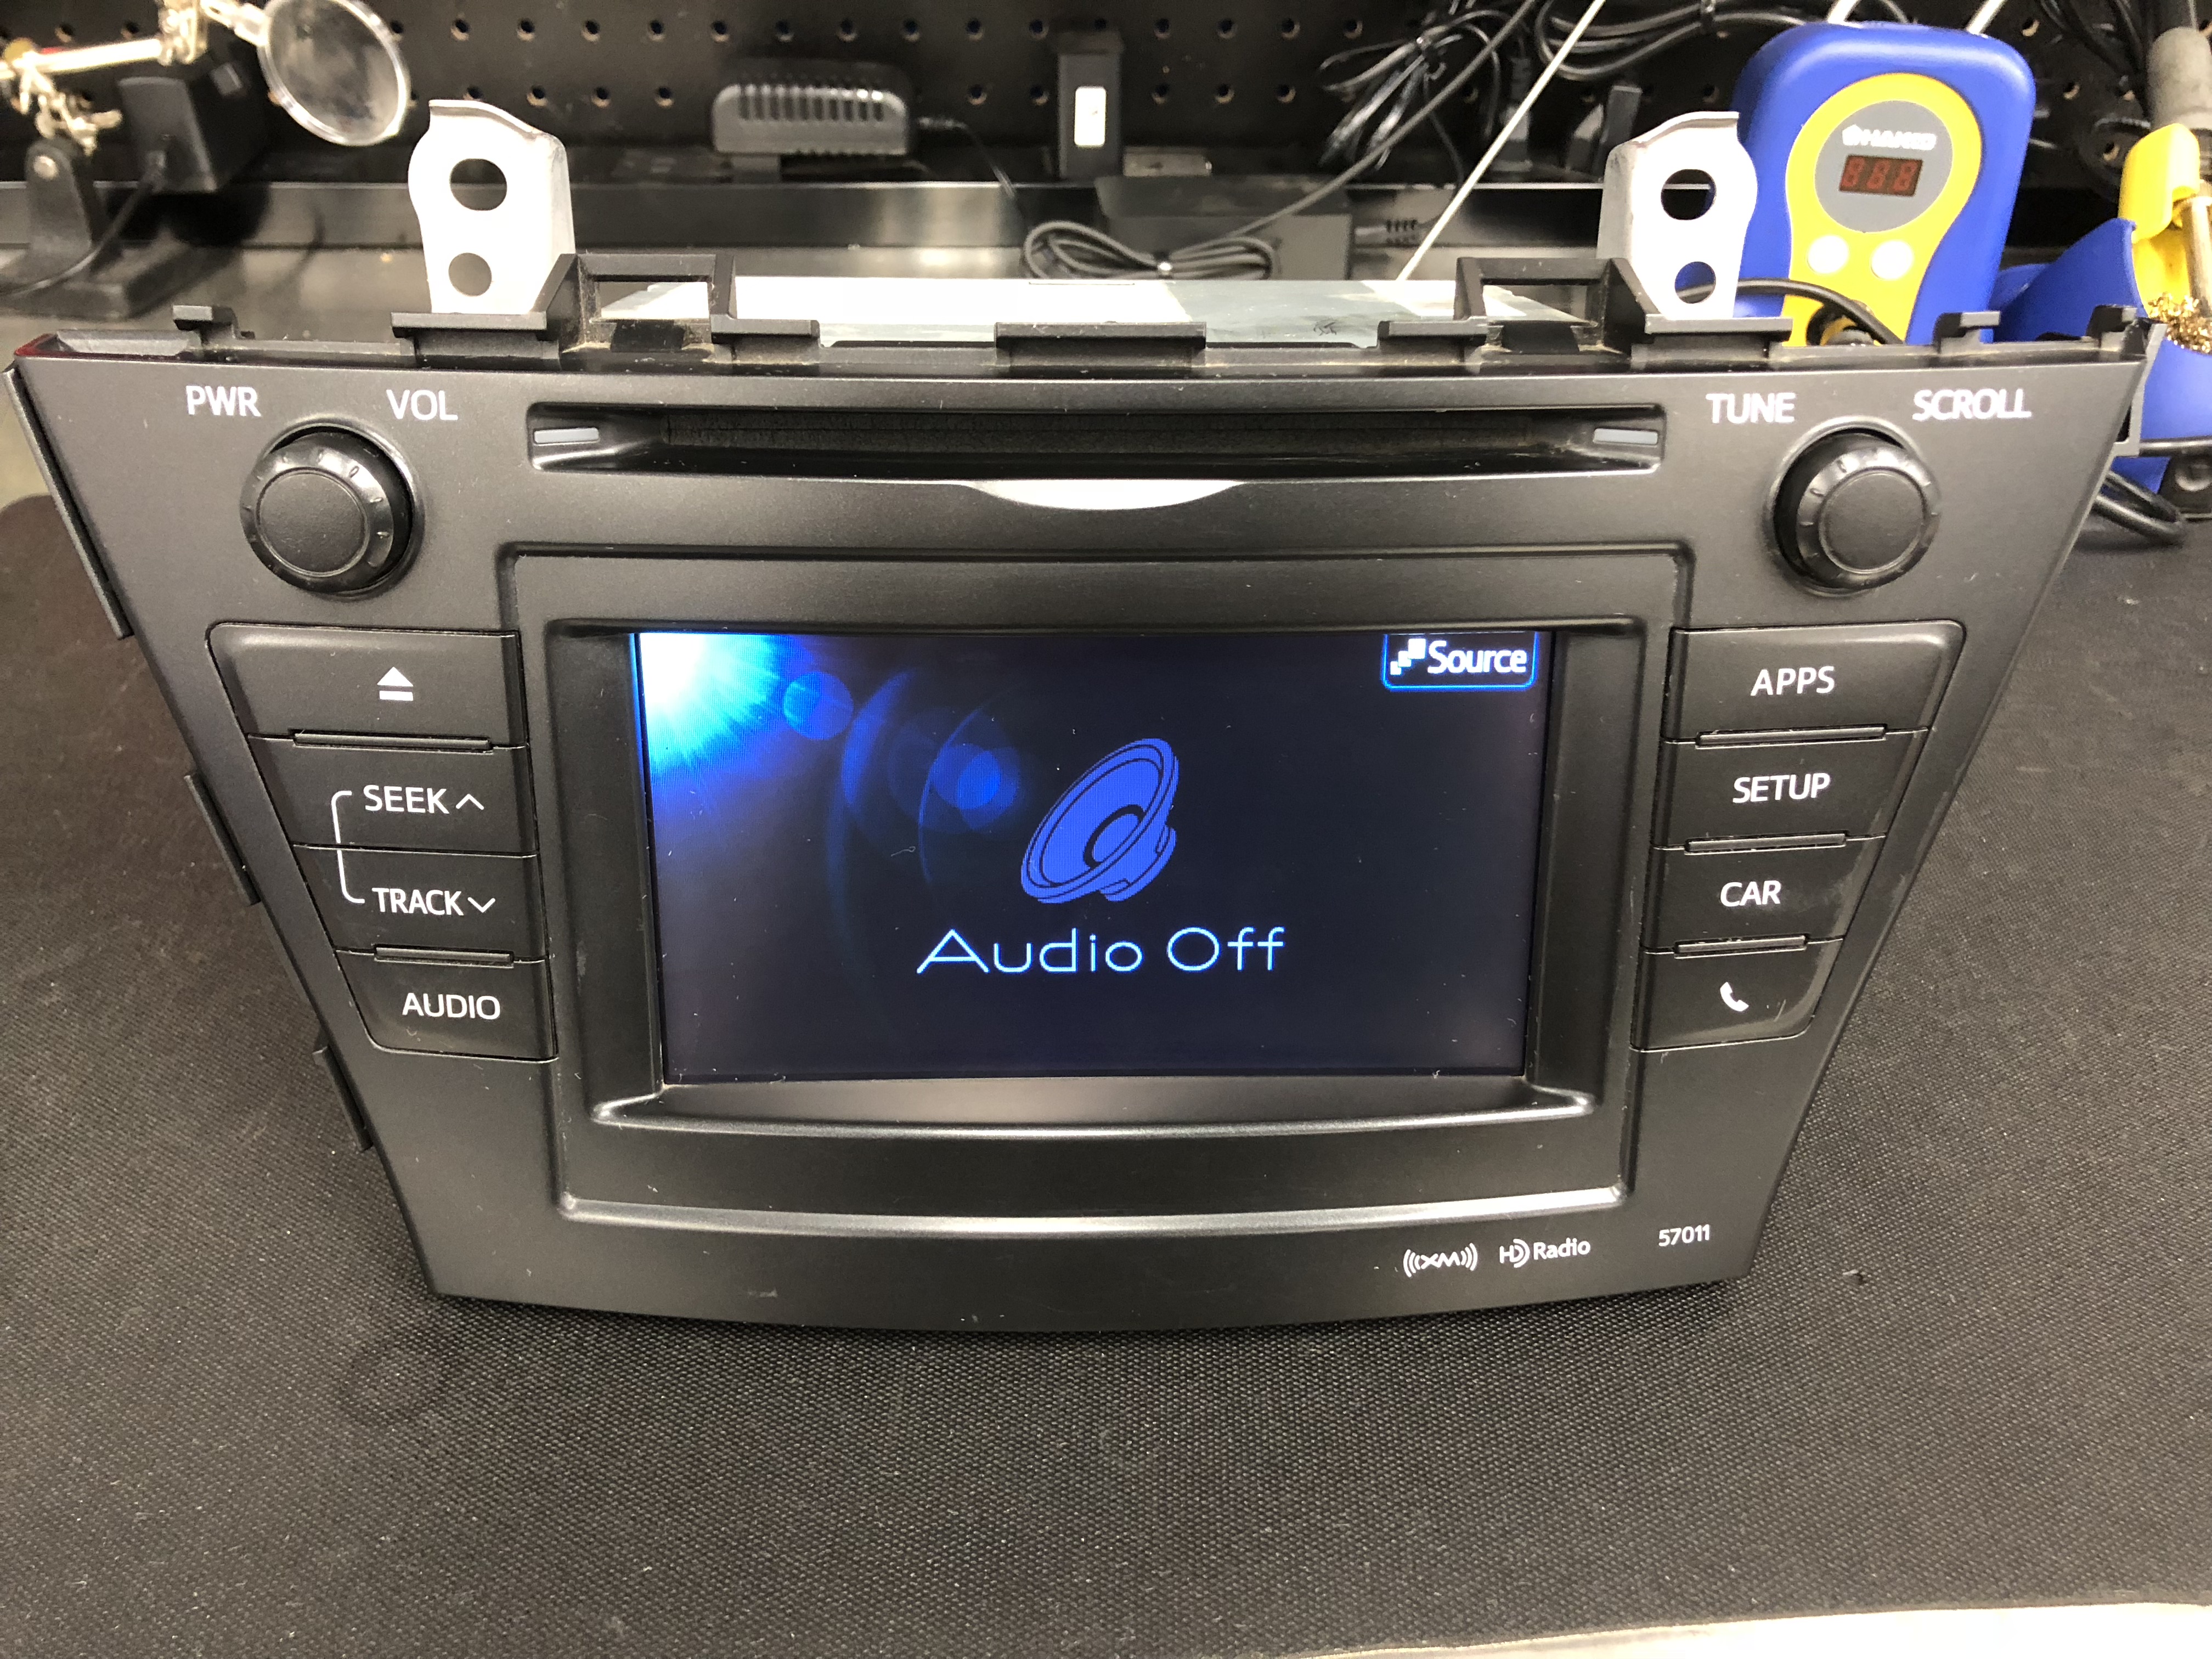 Toyota Prius 57011 AM FM CD Player Radio With MFD Display